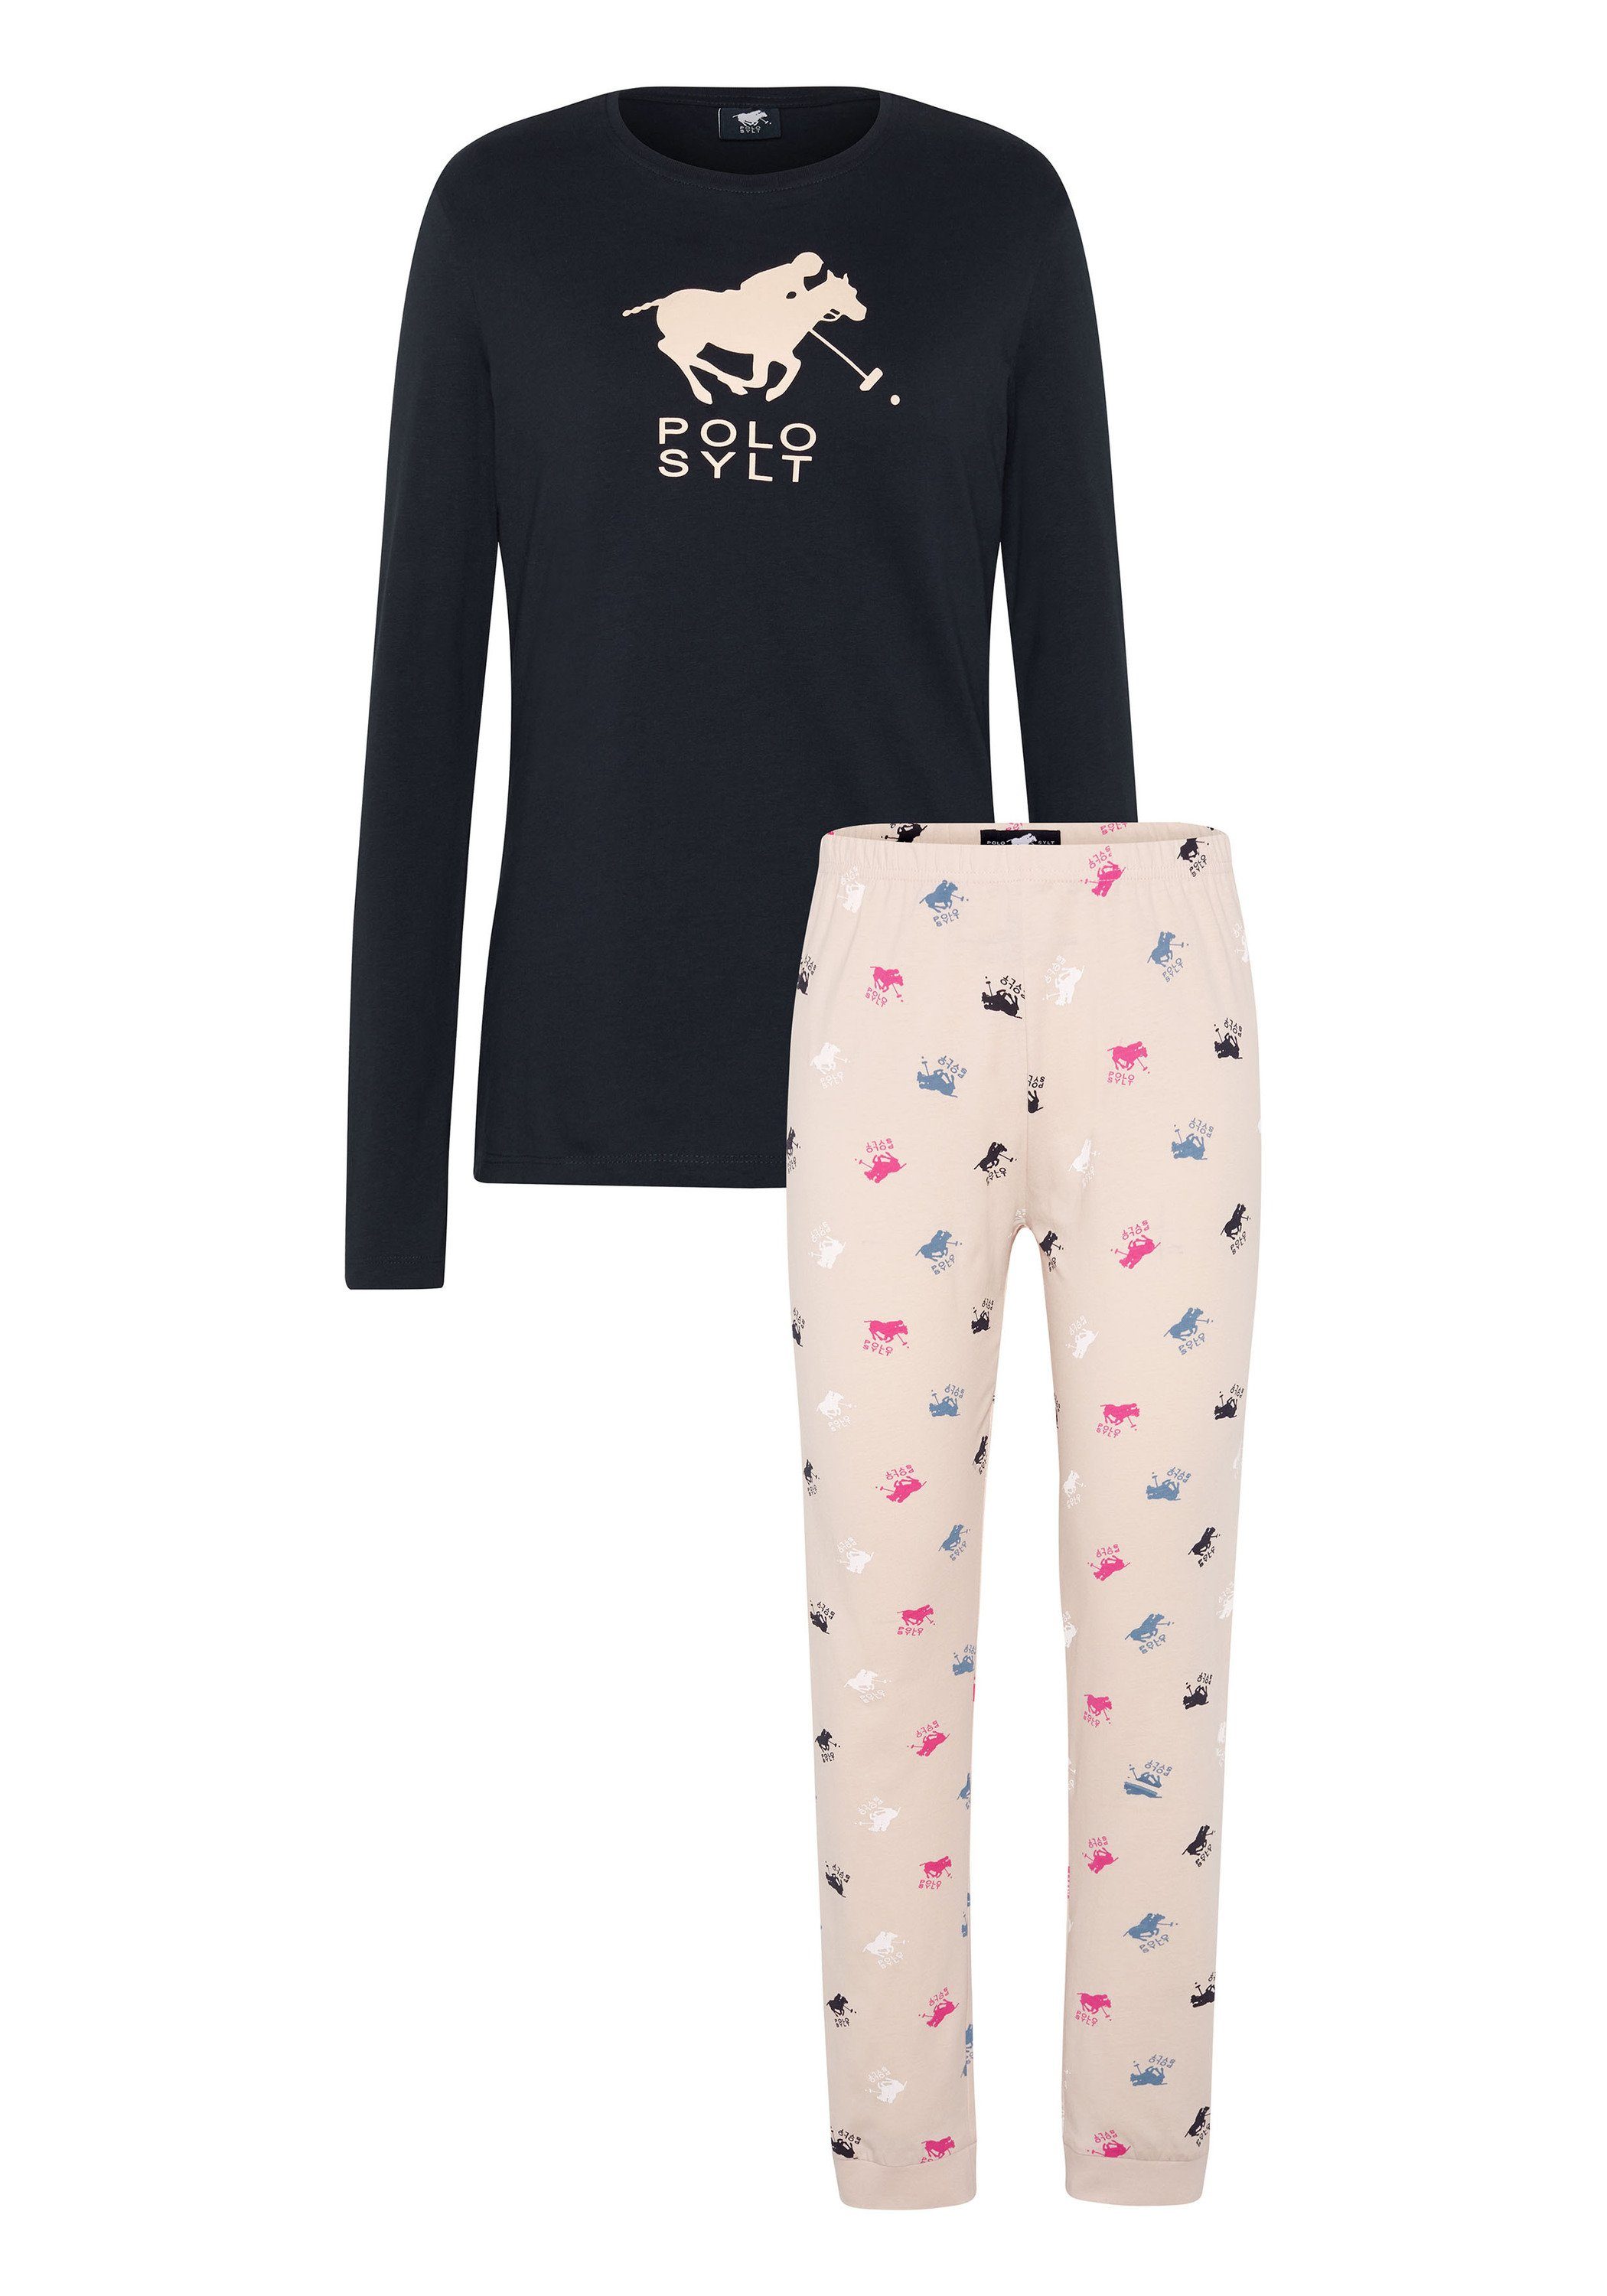 Polo Sylt Pyjama im Label-Design (Set, 2 tlg) 4828 Dark Blue/Light Pink